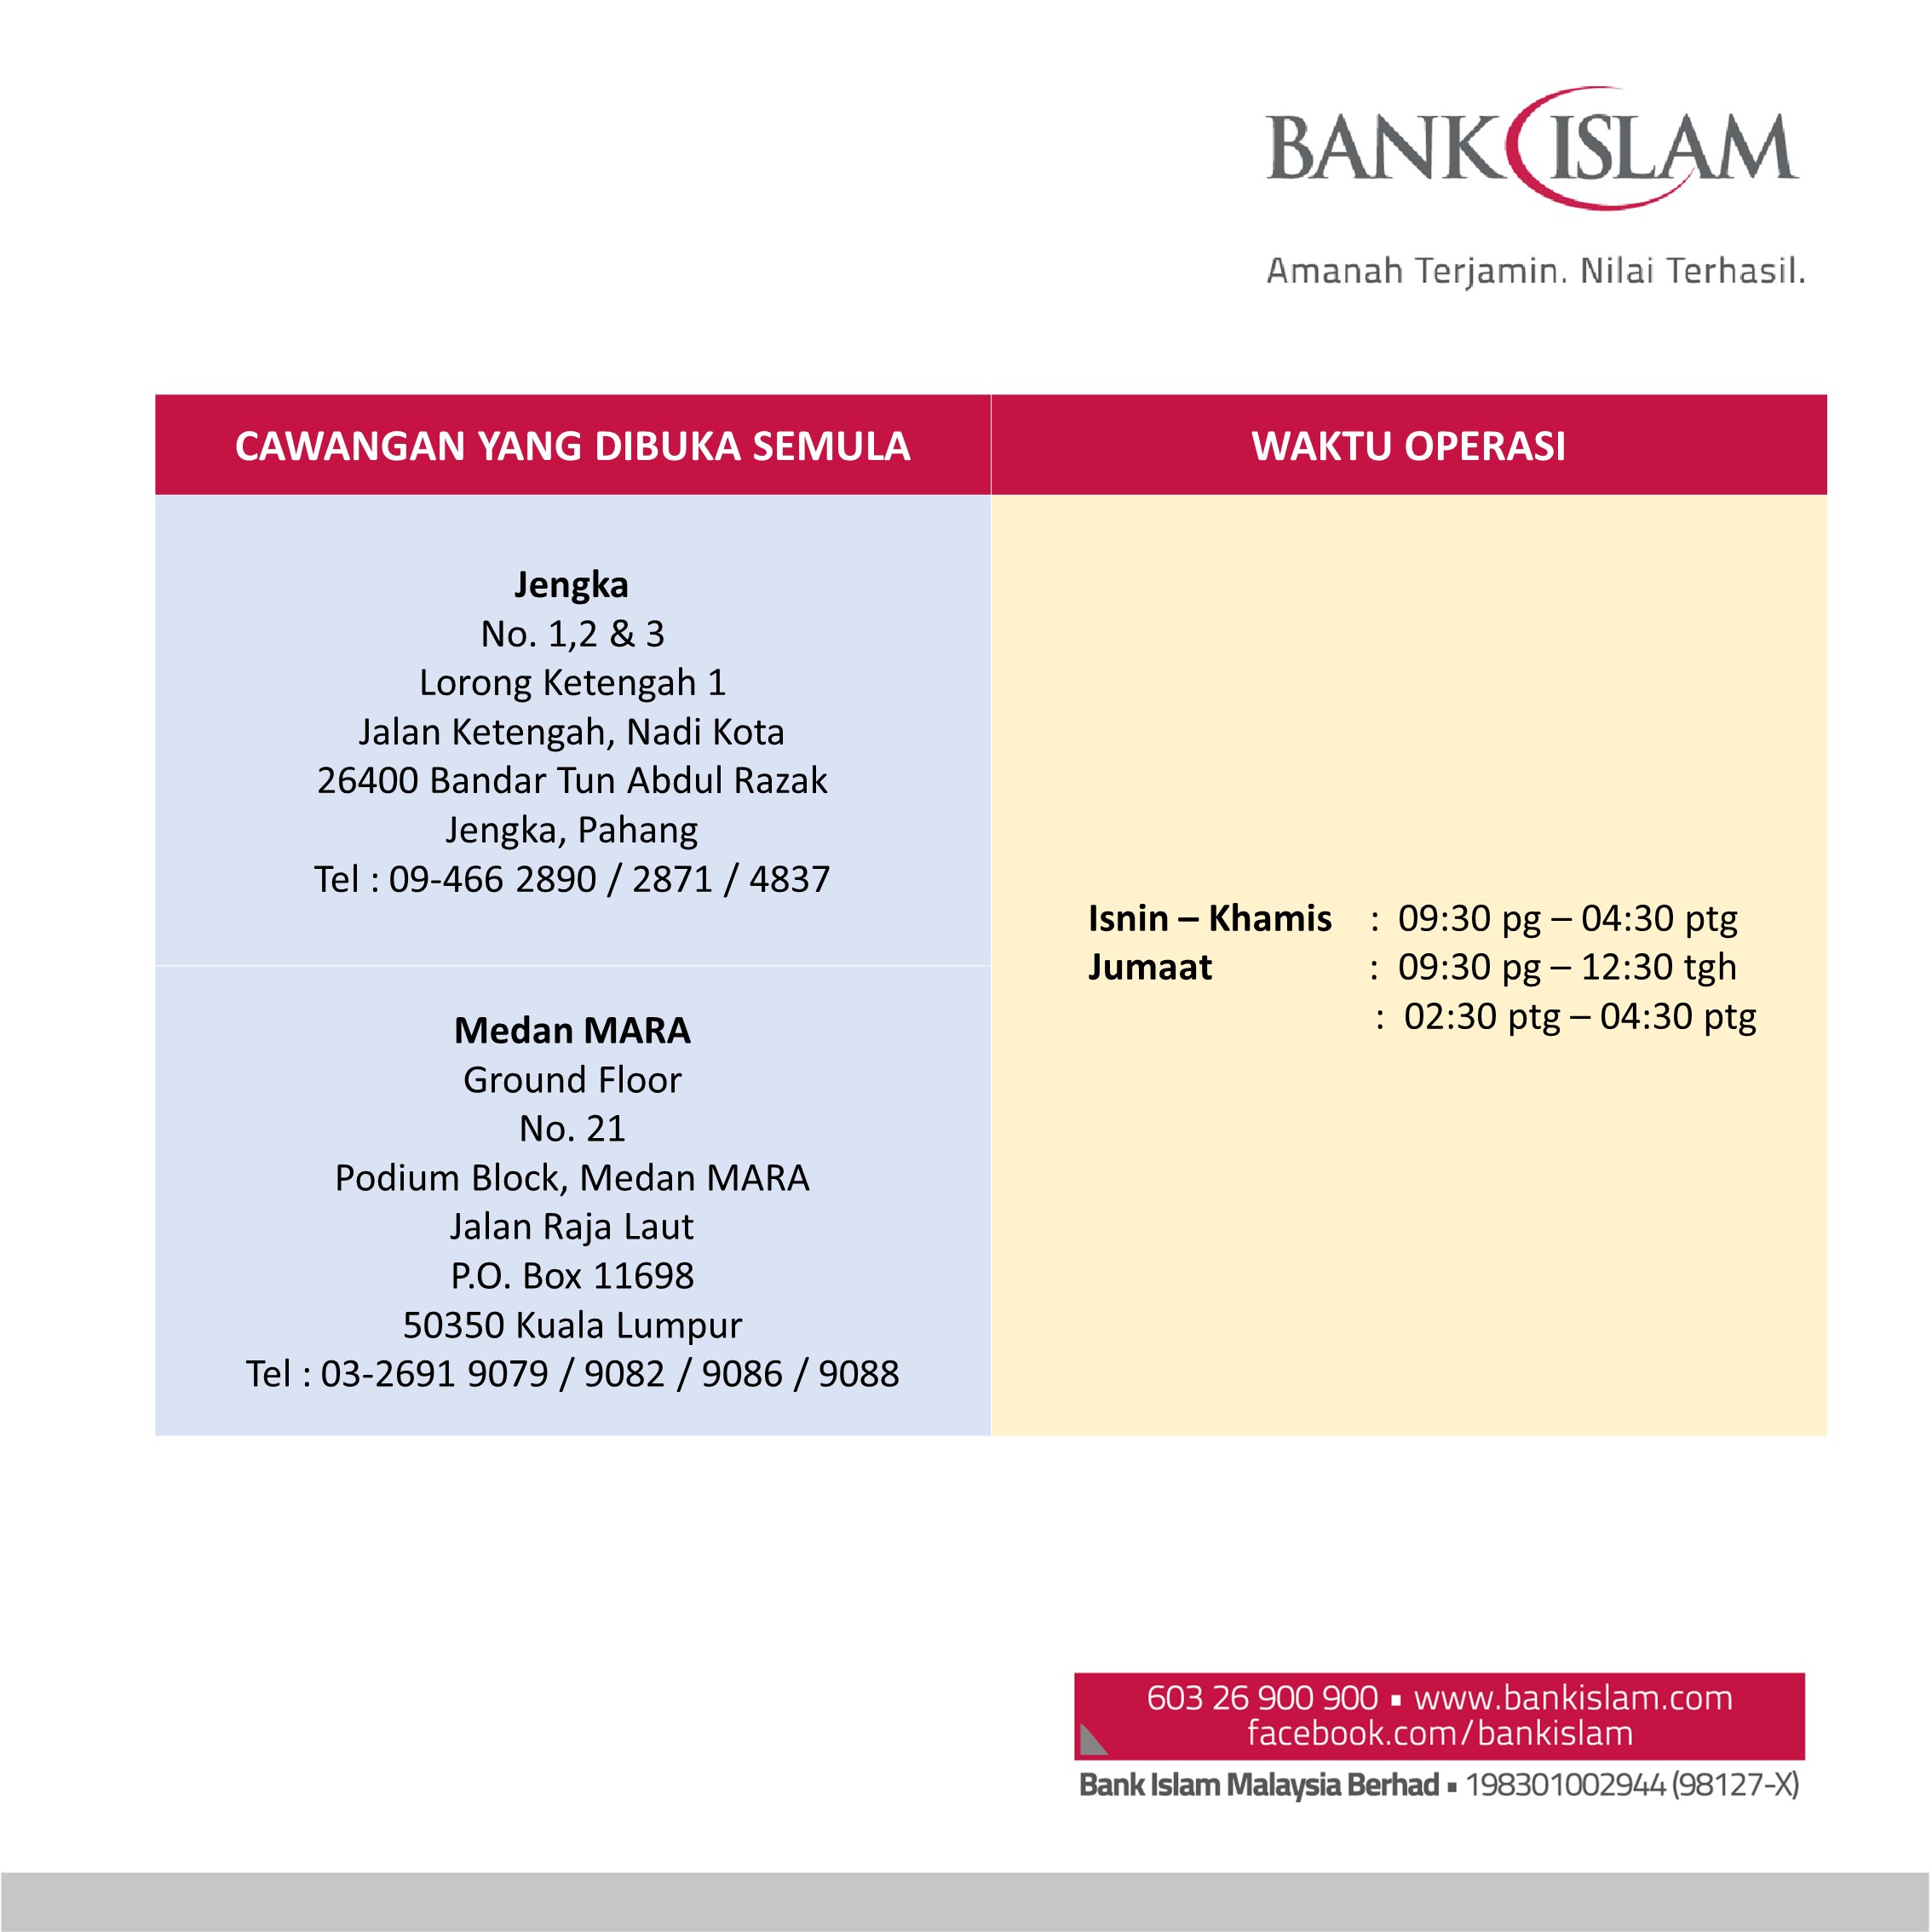 Islam tunjung bank Bank Islam